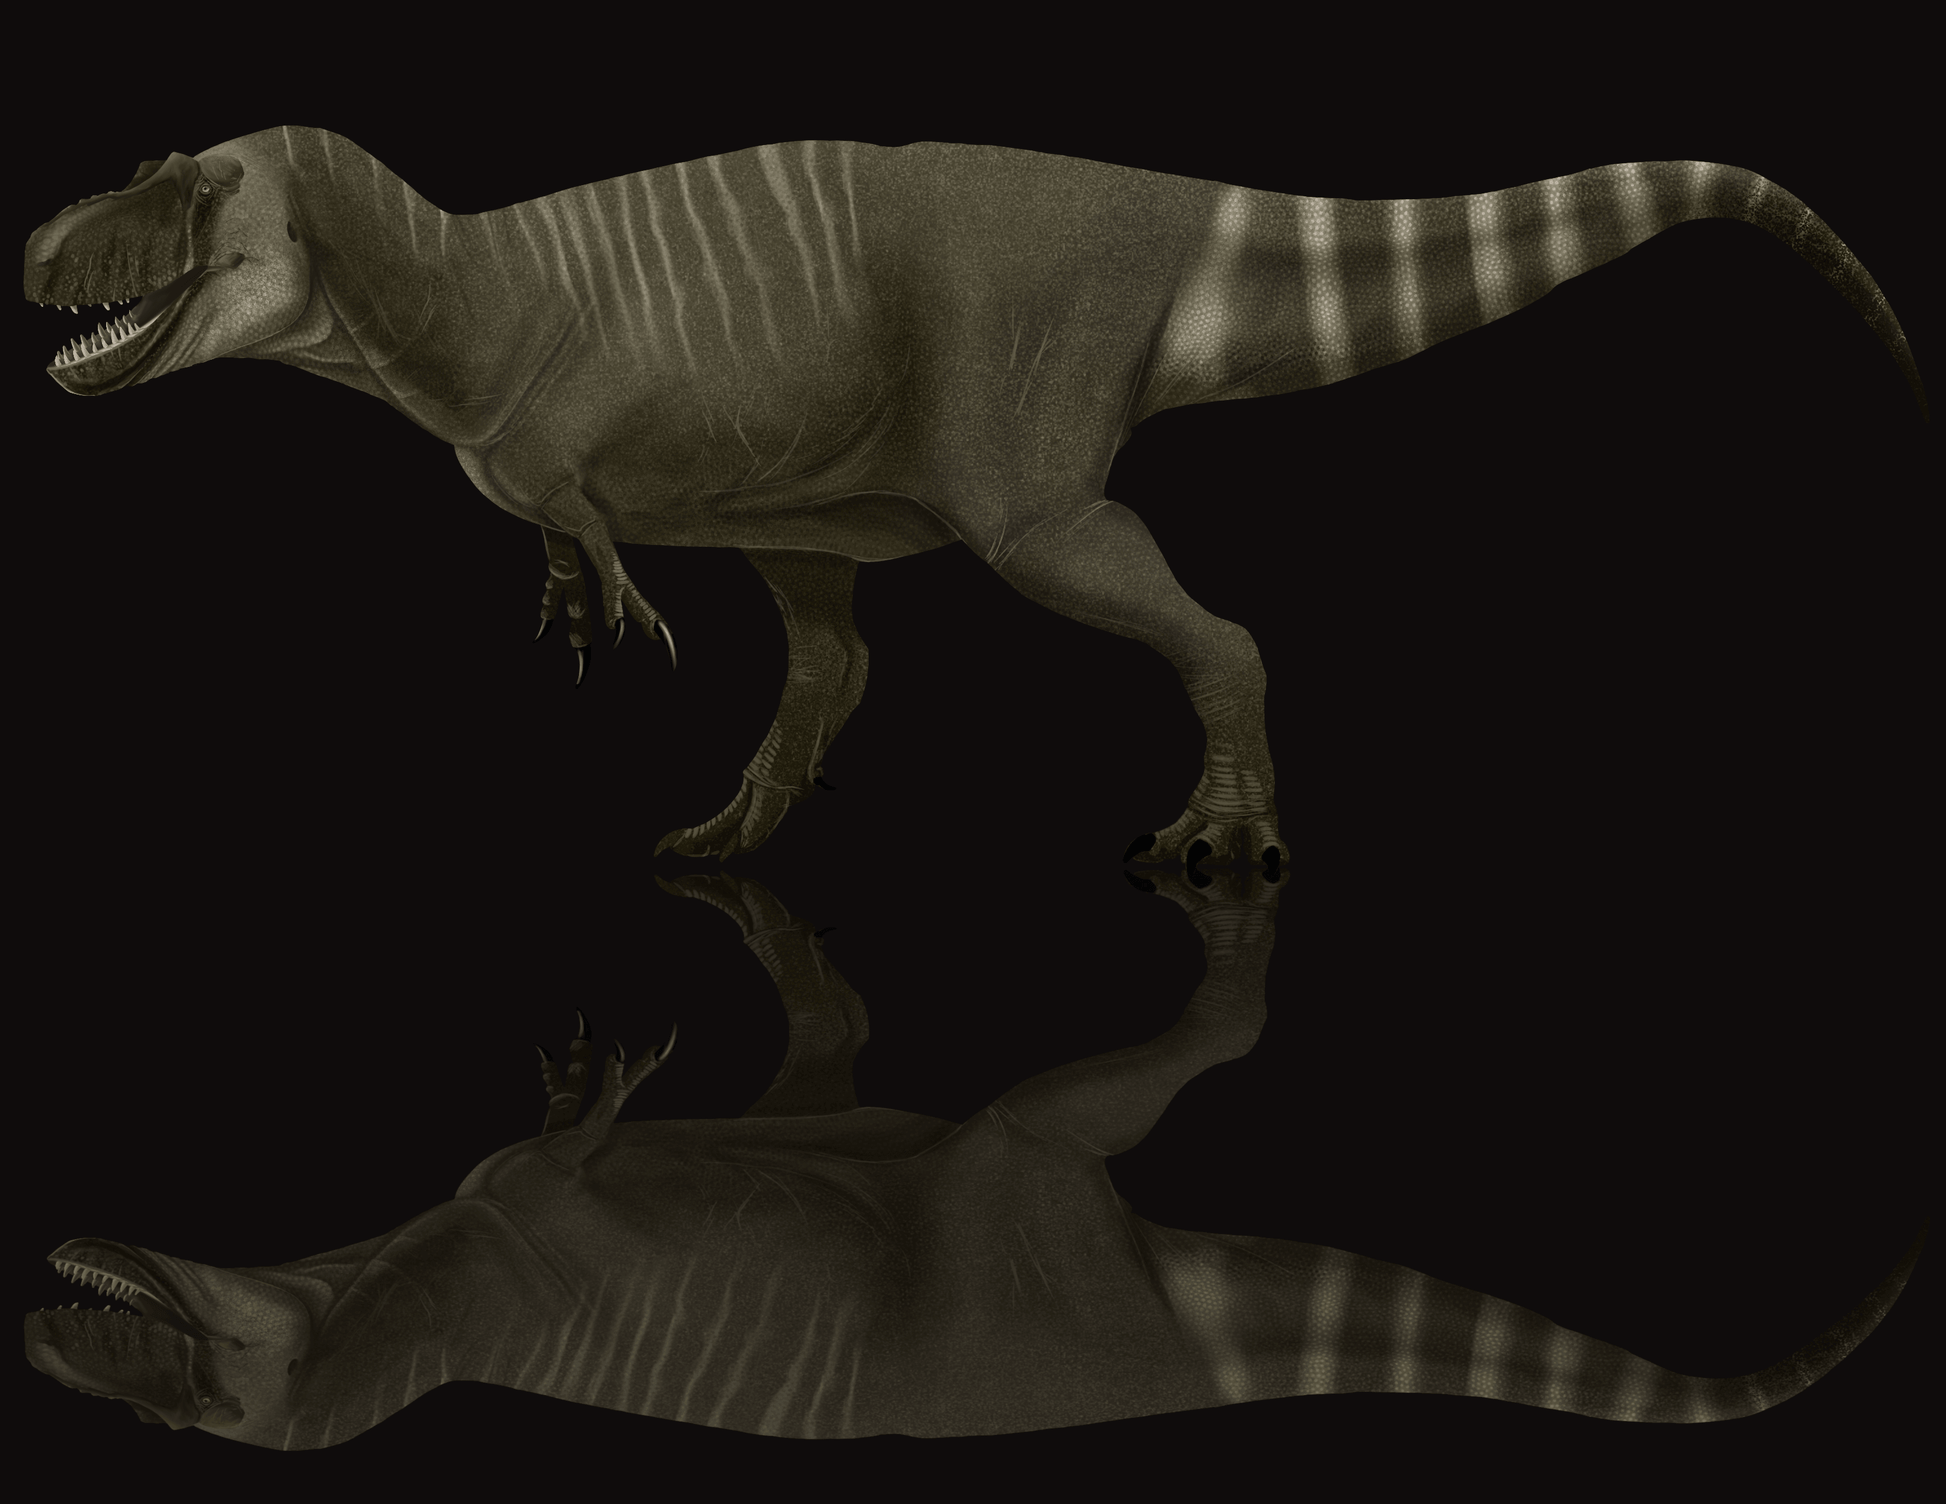 Albertosaurus, Dinosaur King